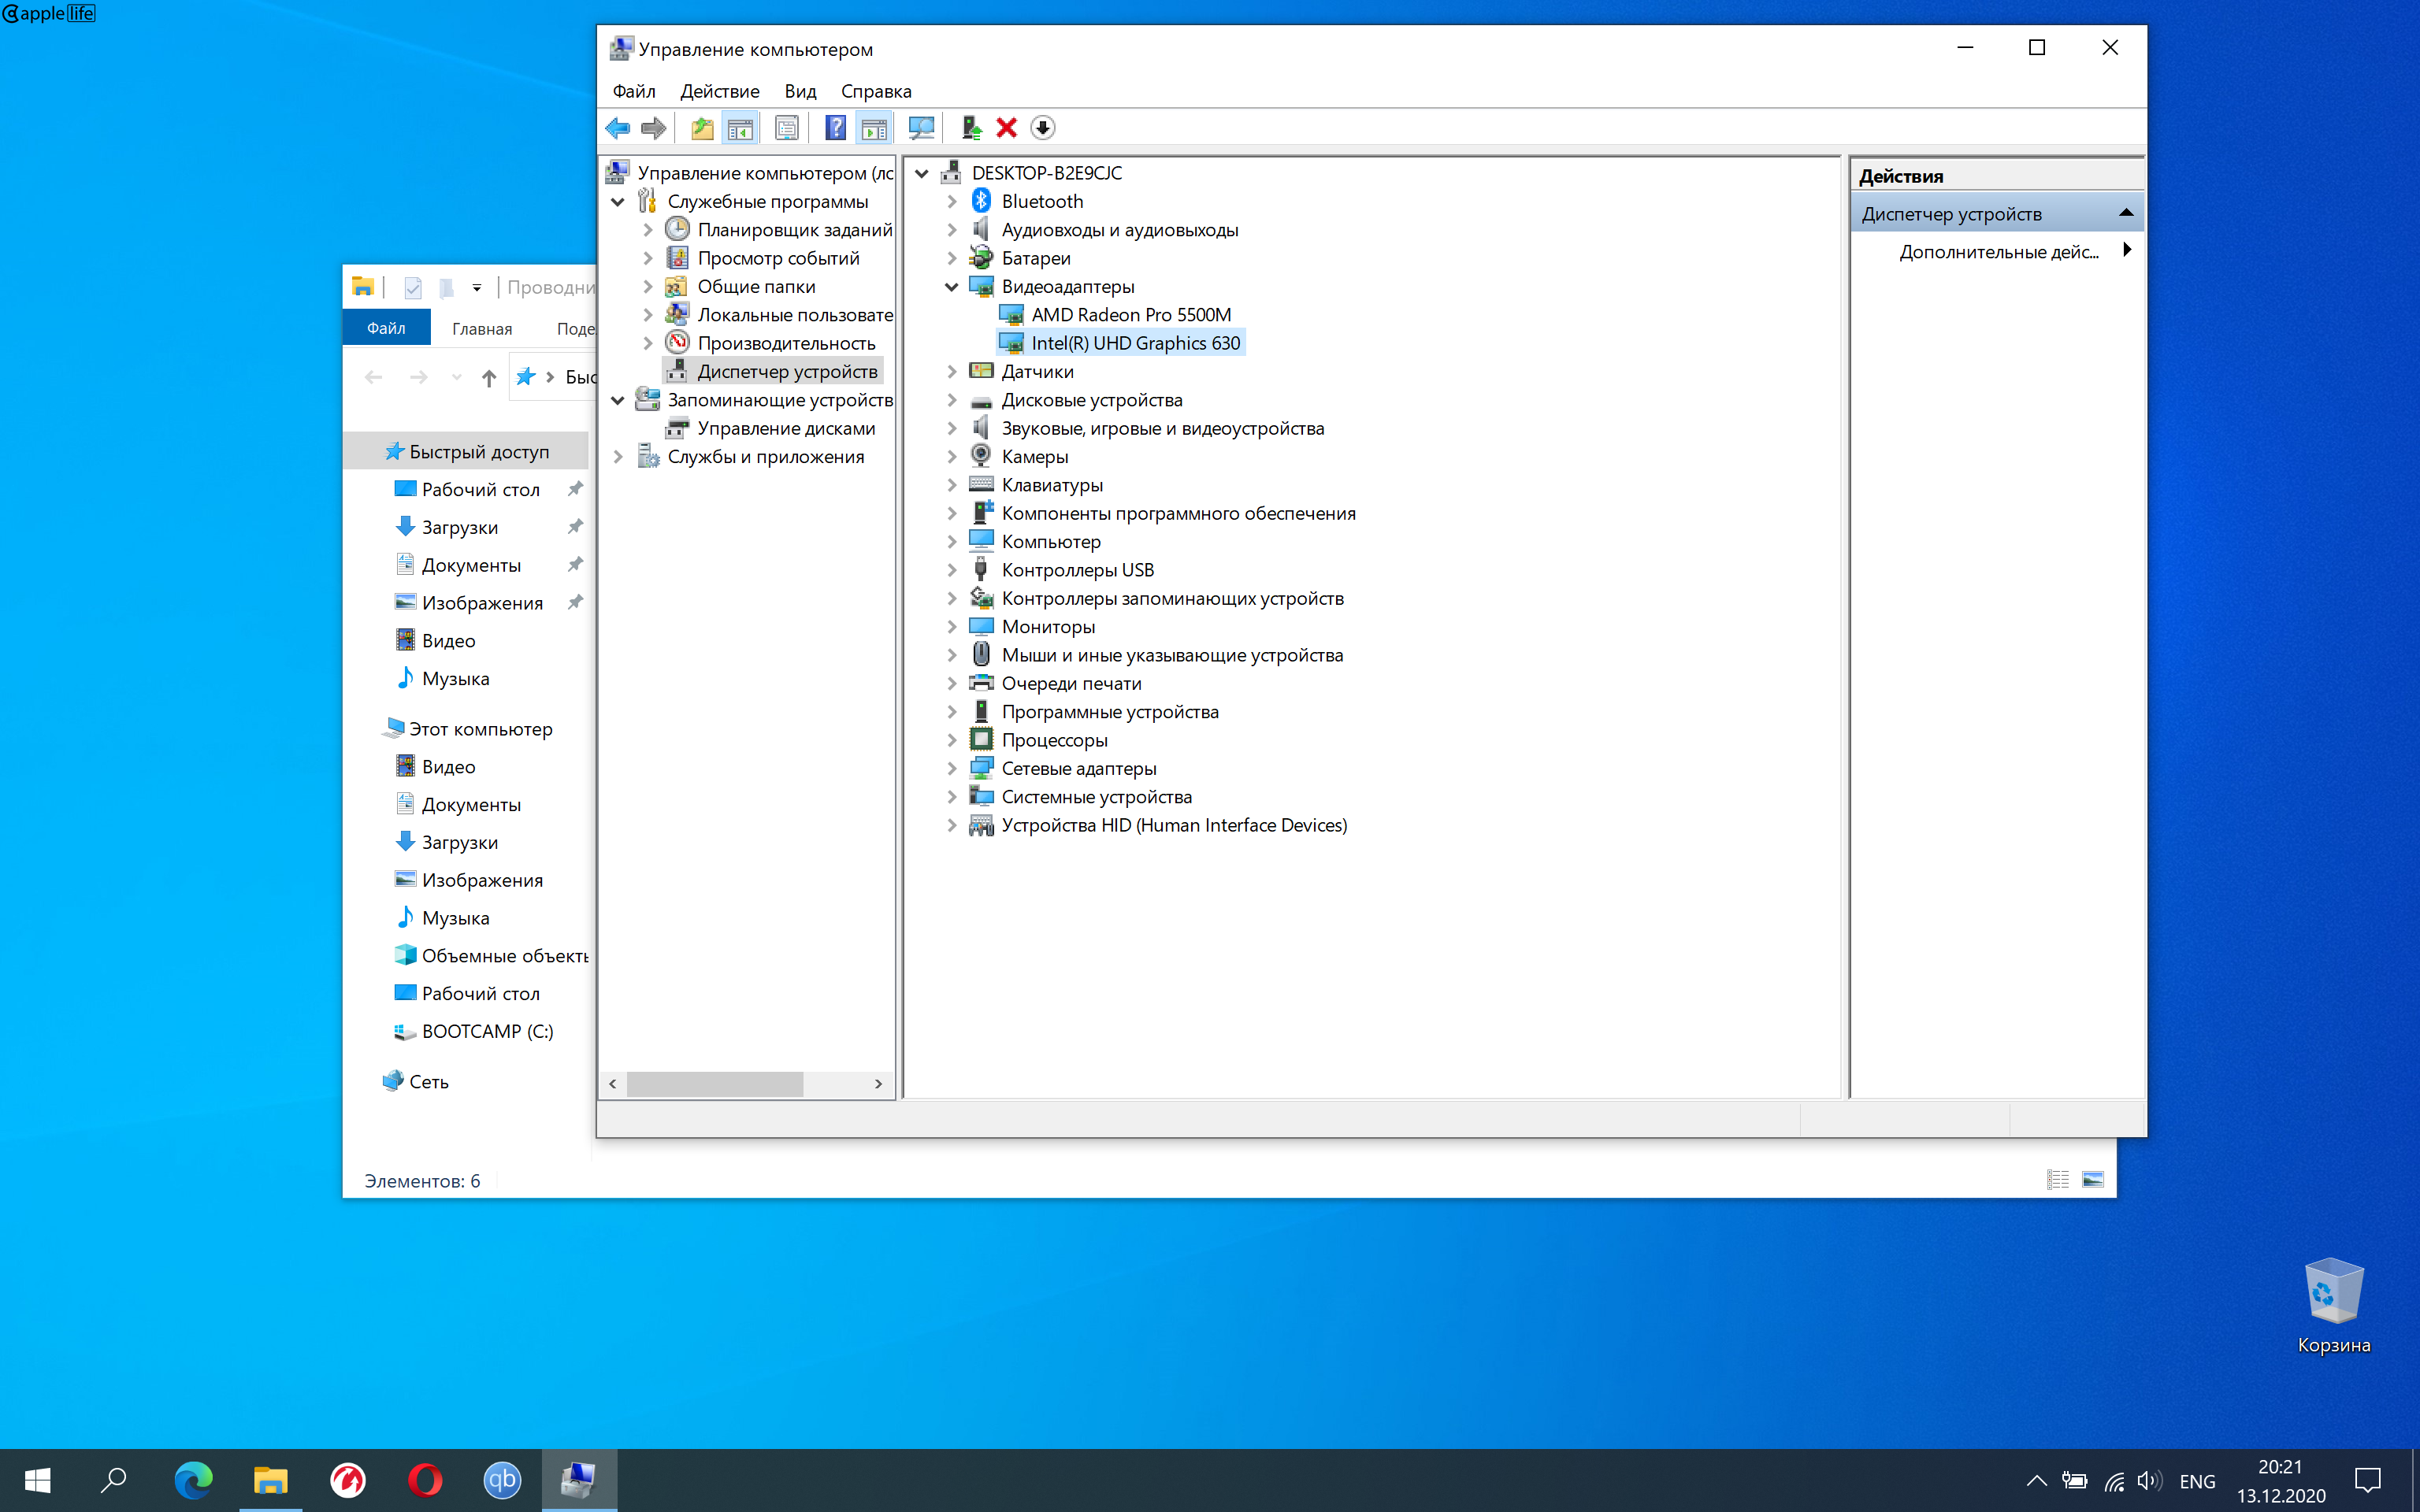 how to take a screenshot in windows 10 bootcamp